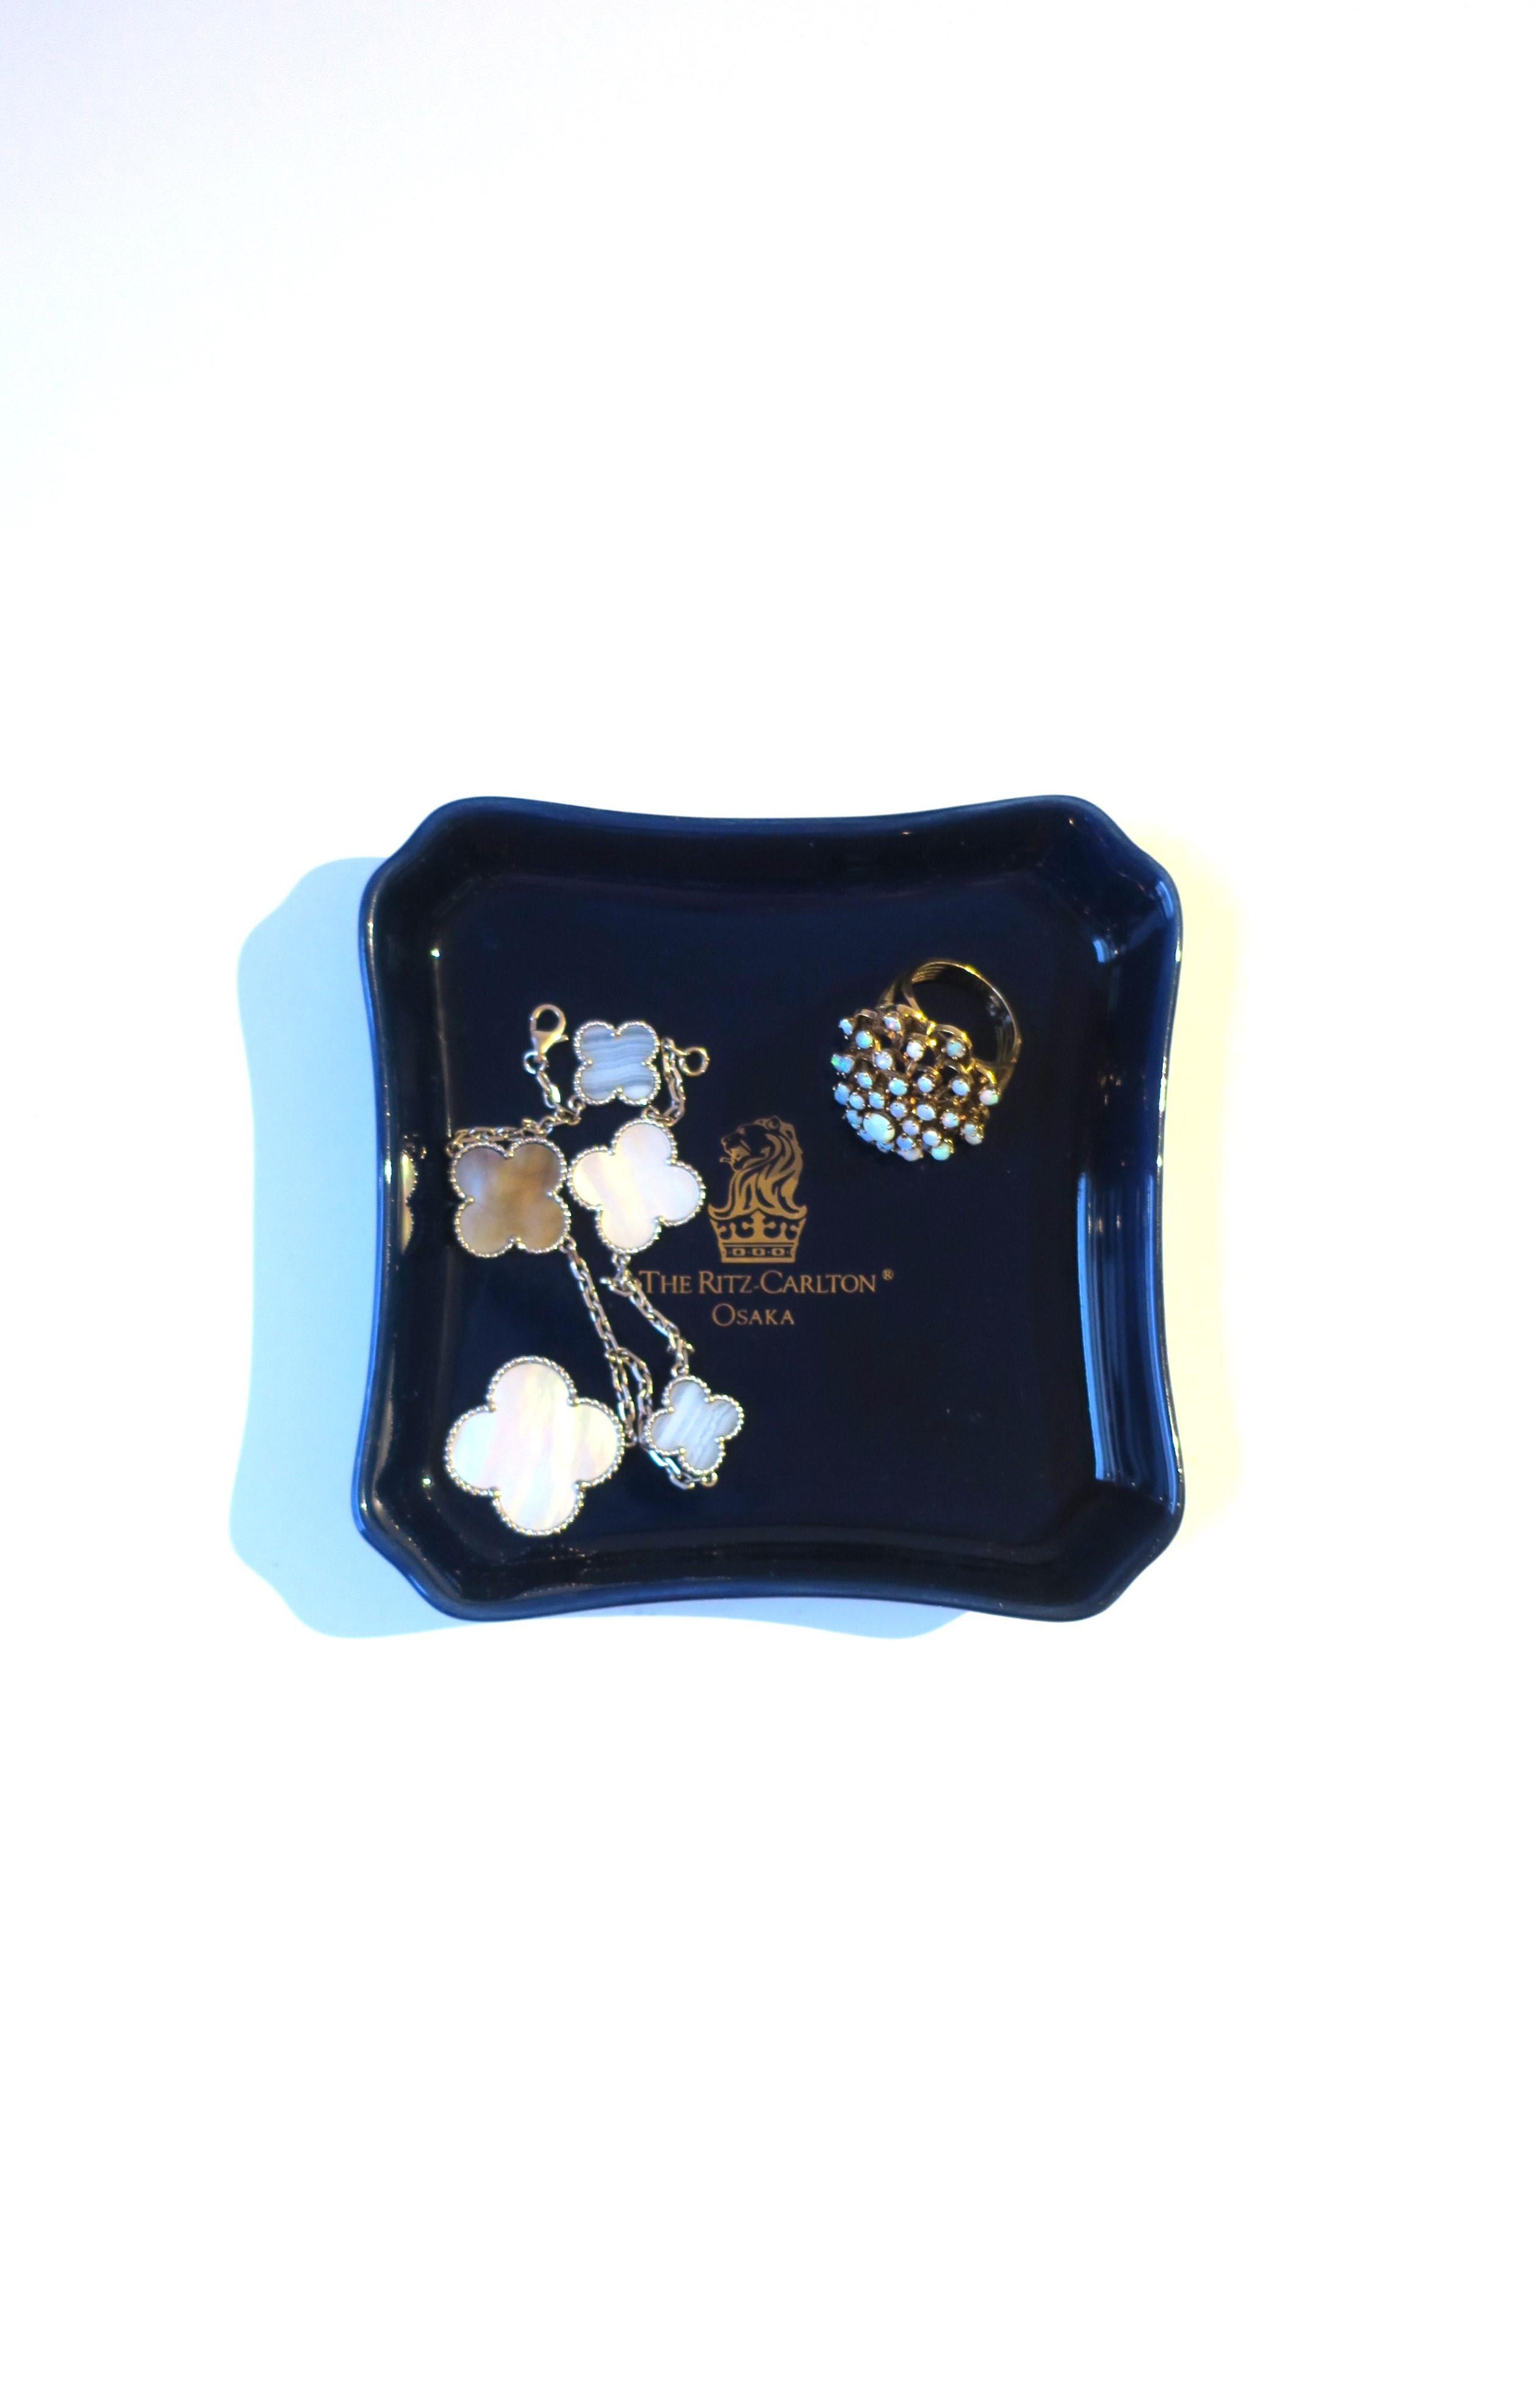 Japanese Ritz Carlton Osaka Porcelain Jewelry Dish For Sale